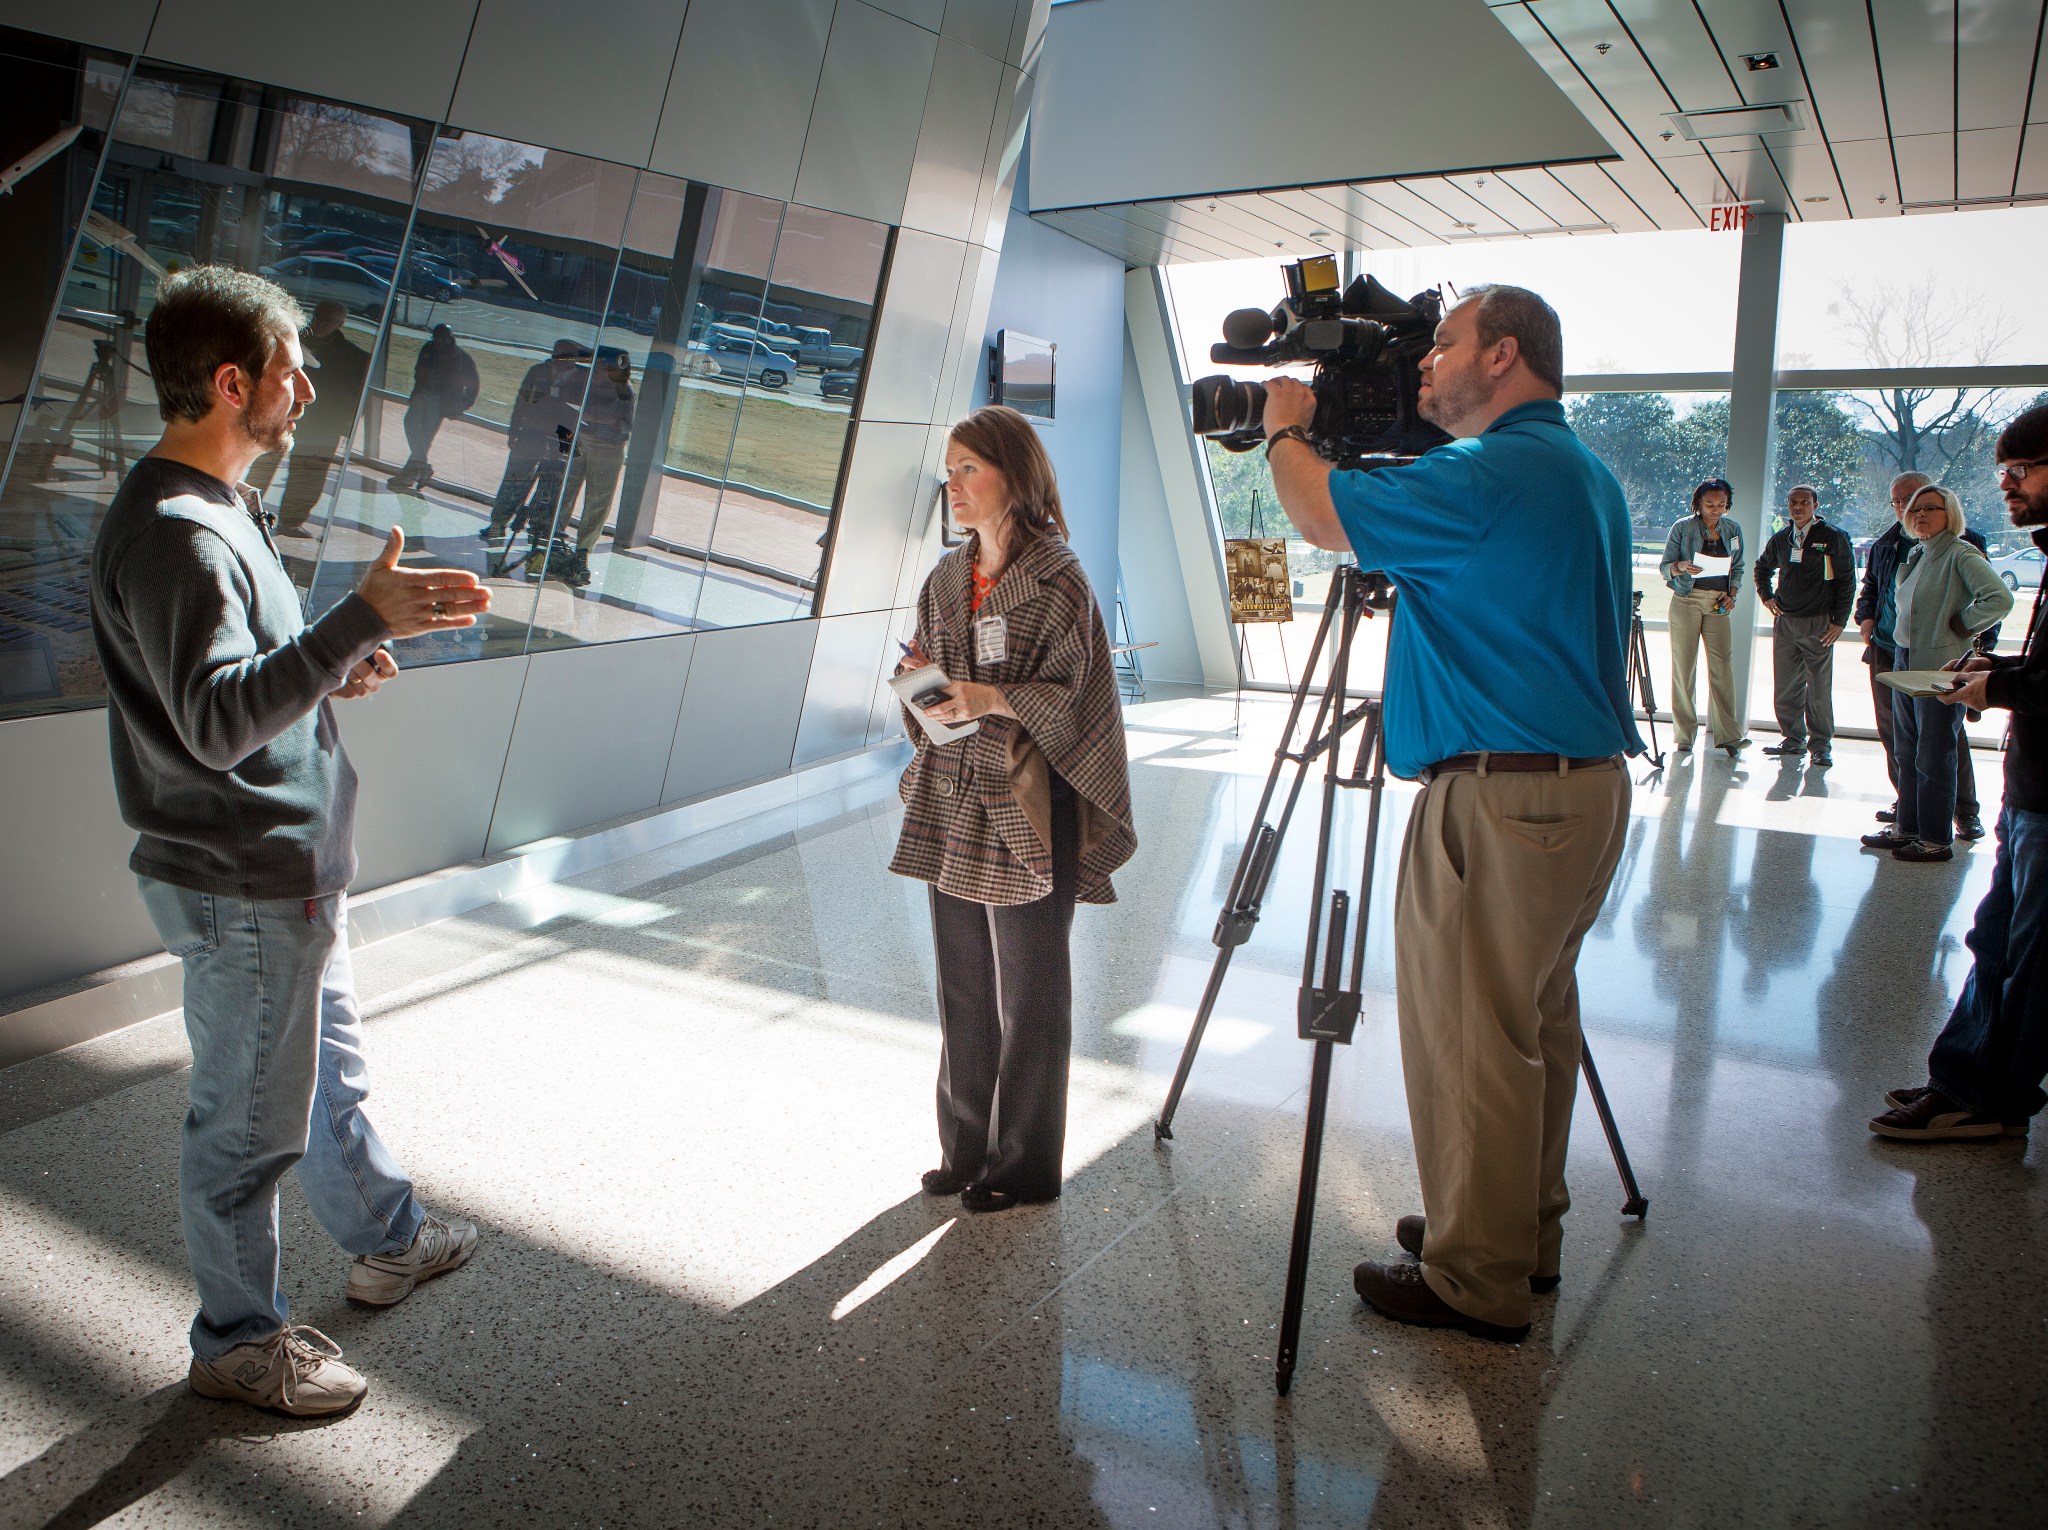 NASA Langley Researcher Dan Mazanek speaks with local media.